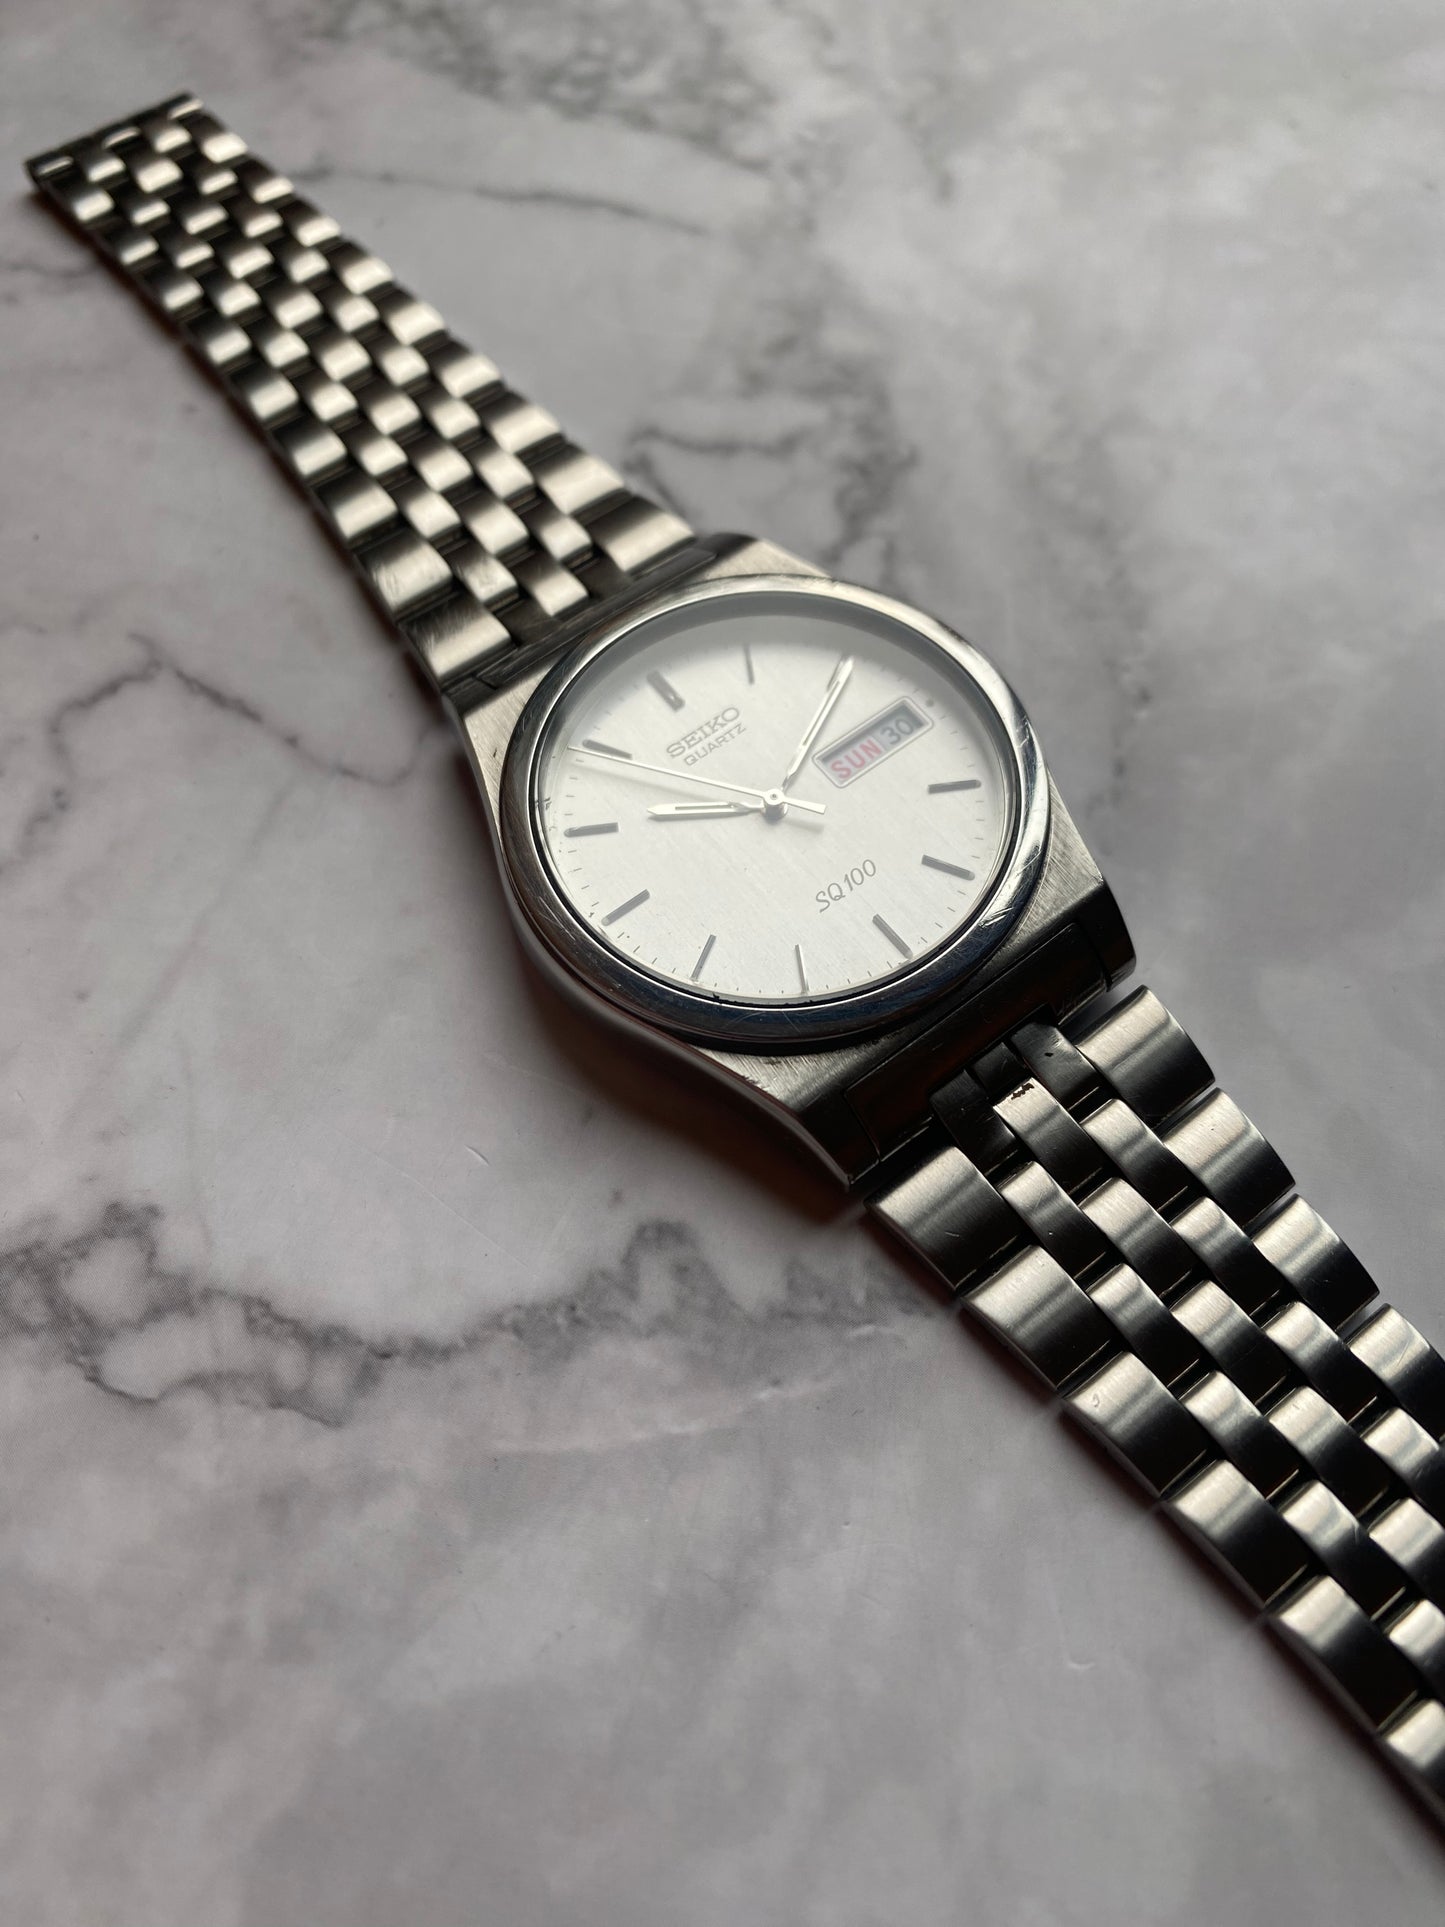 Seiko Quartz SQ100 7N43-8001 – The Wrist Watcher